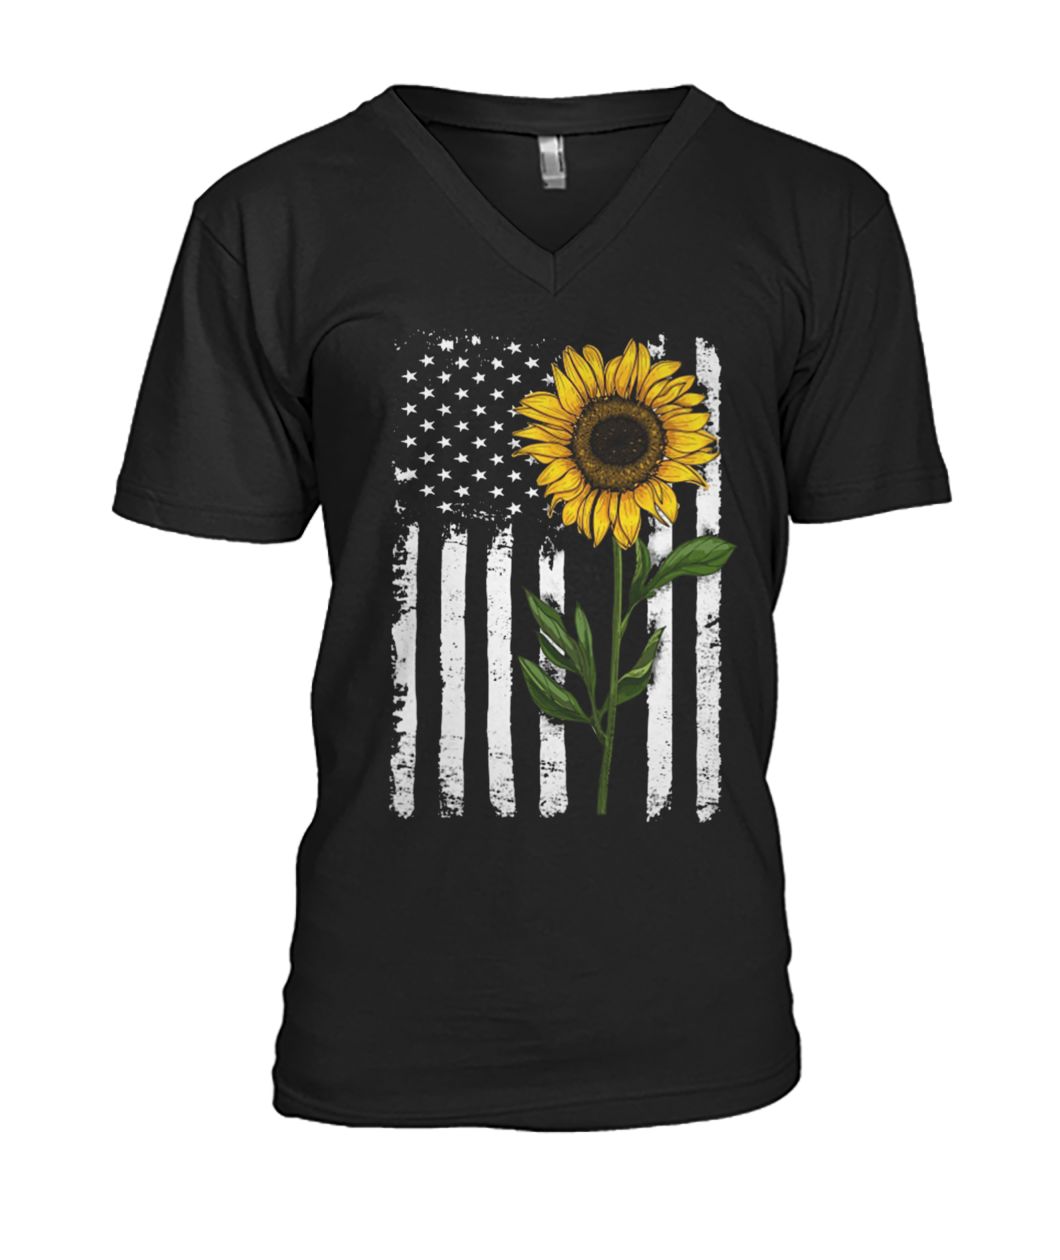 American flag sunflower hippie distressed mens v-neck